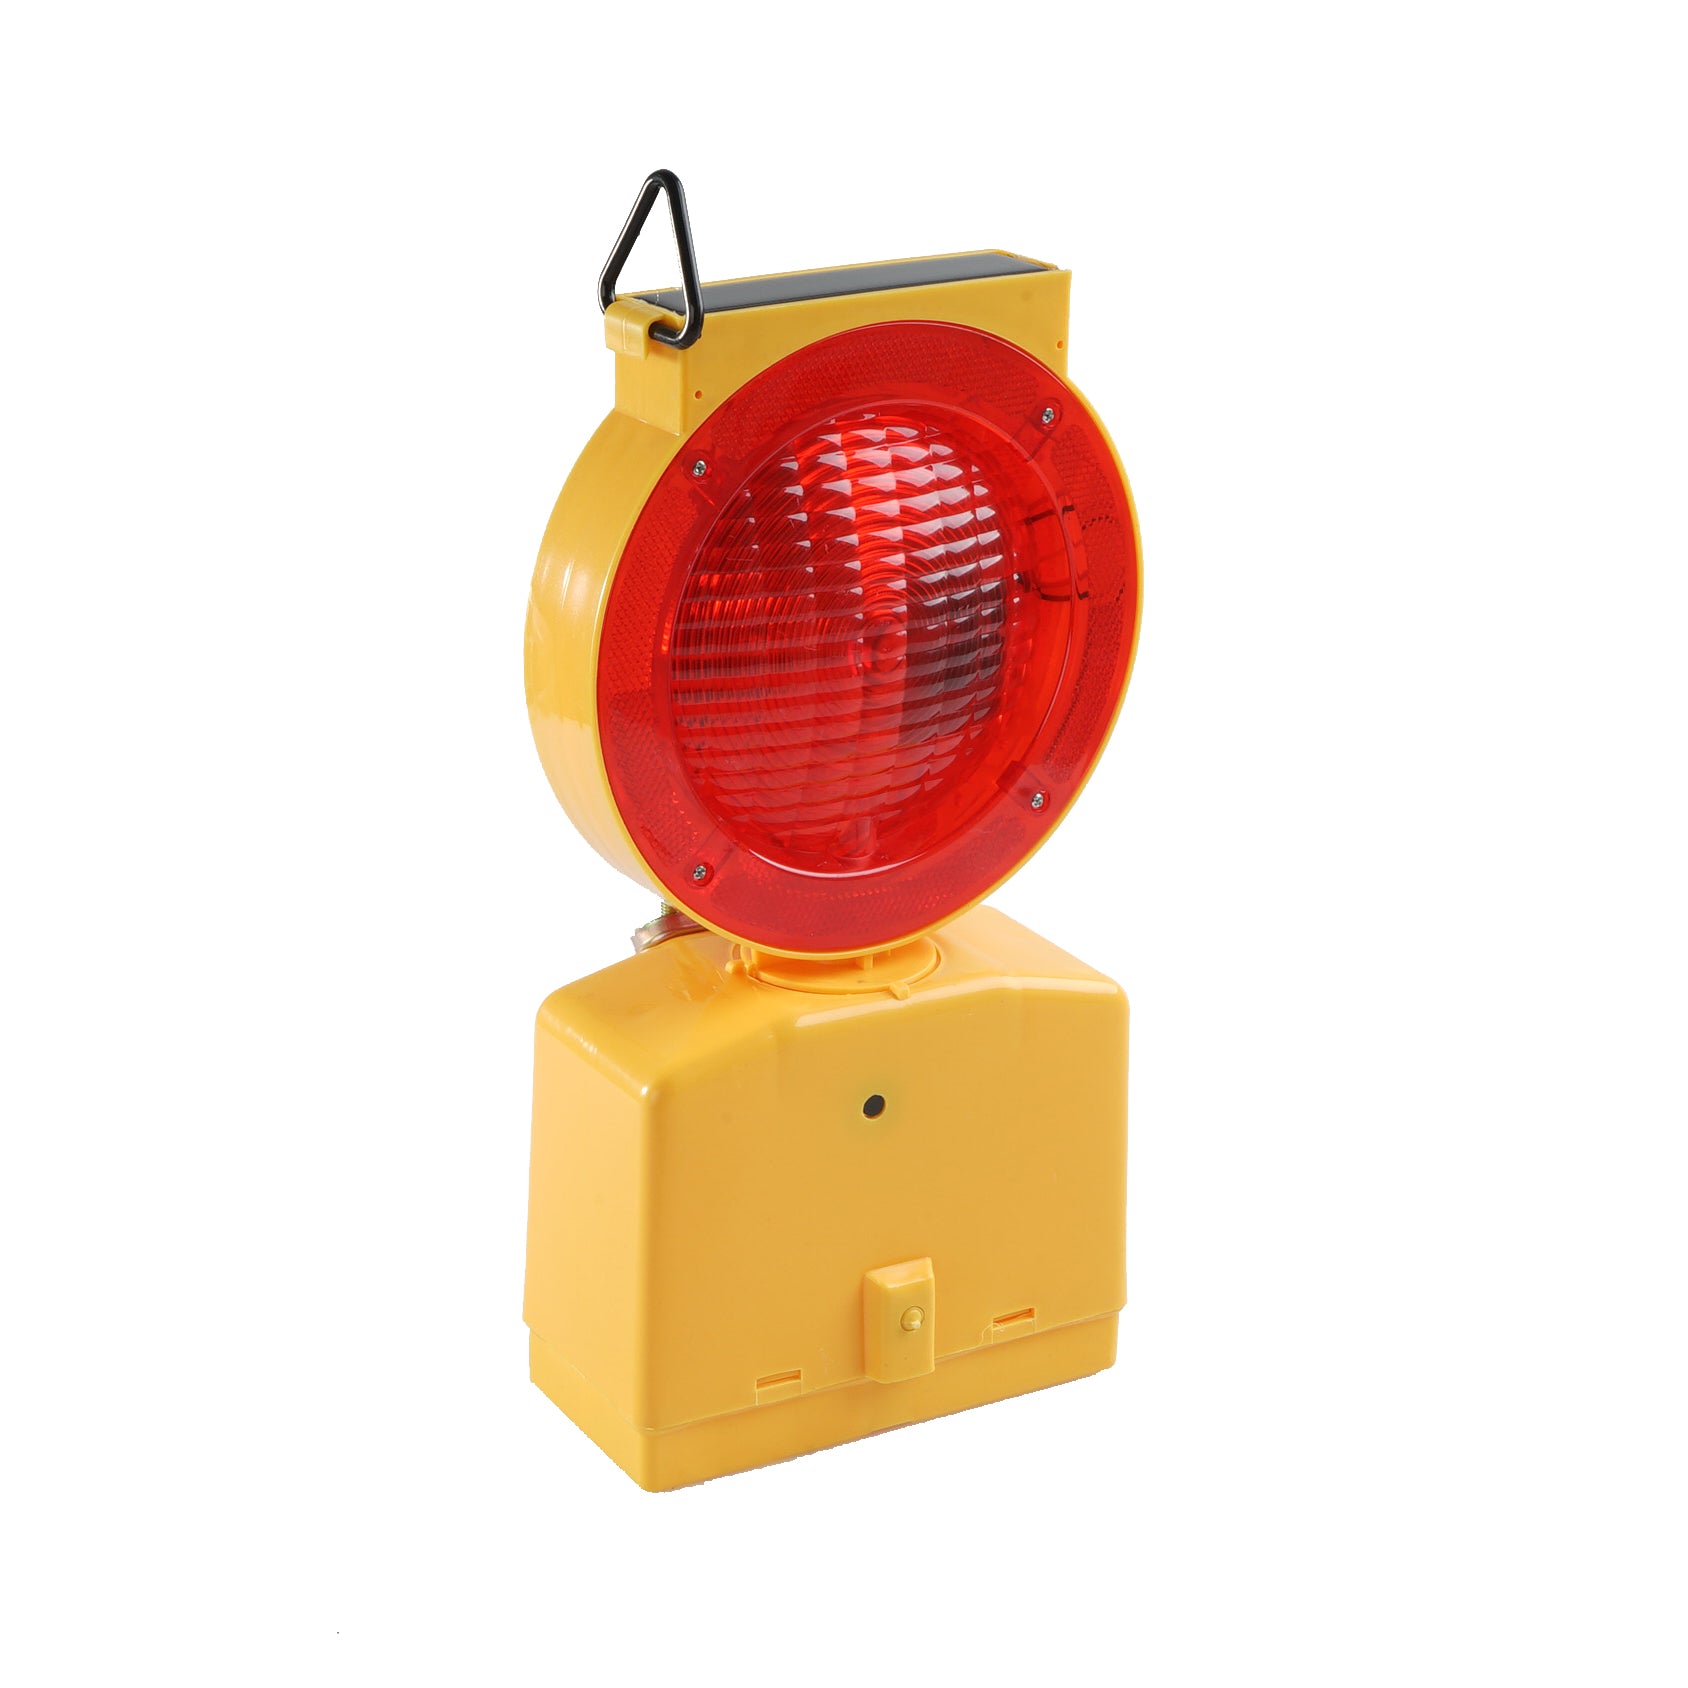 Proguard Solar Hazard Warning Light, safety-vest-traffic-control-equipment